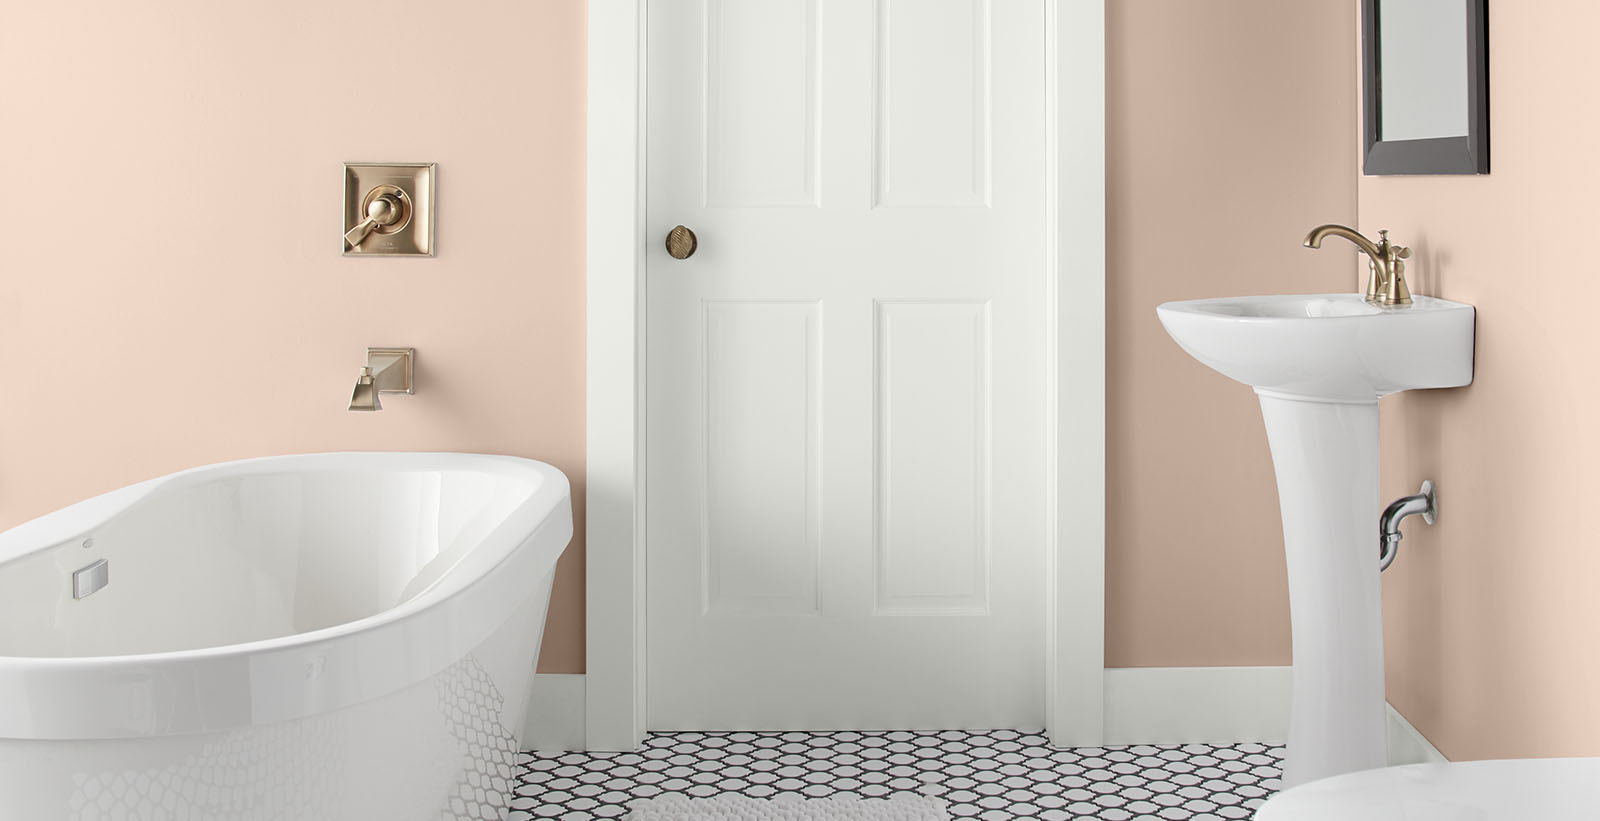 11 Best Bathroom Paint Colors  Small bathroom colors, Small bathroom  paint, Small bathroom remodel